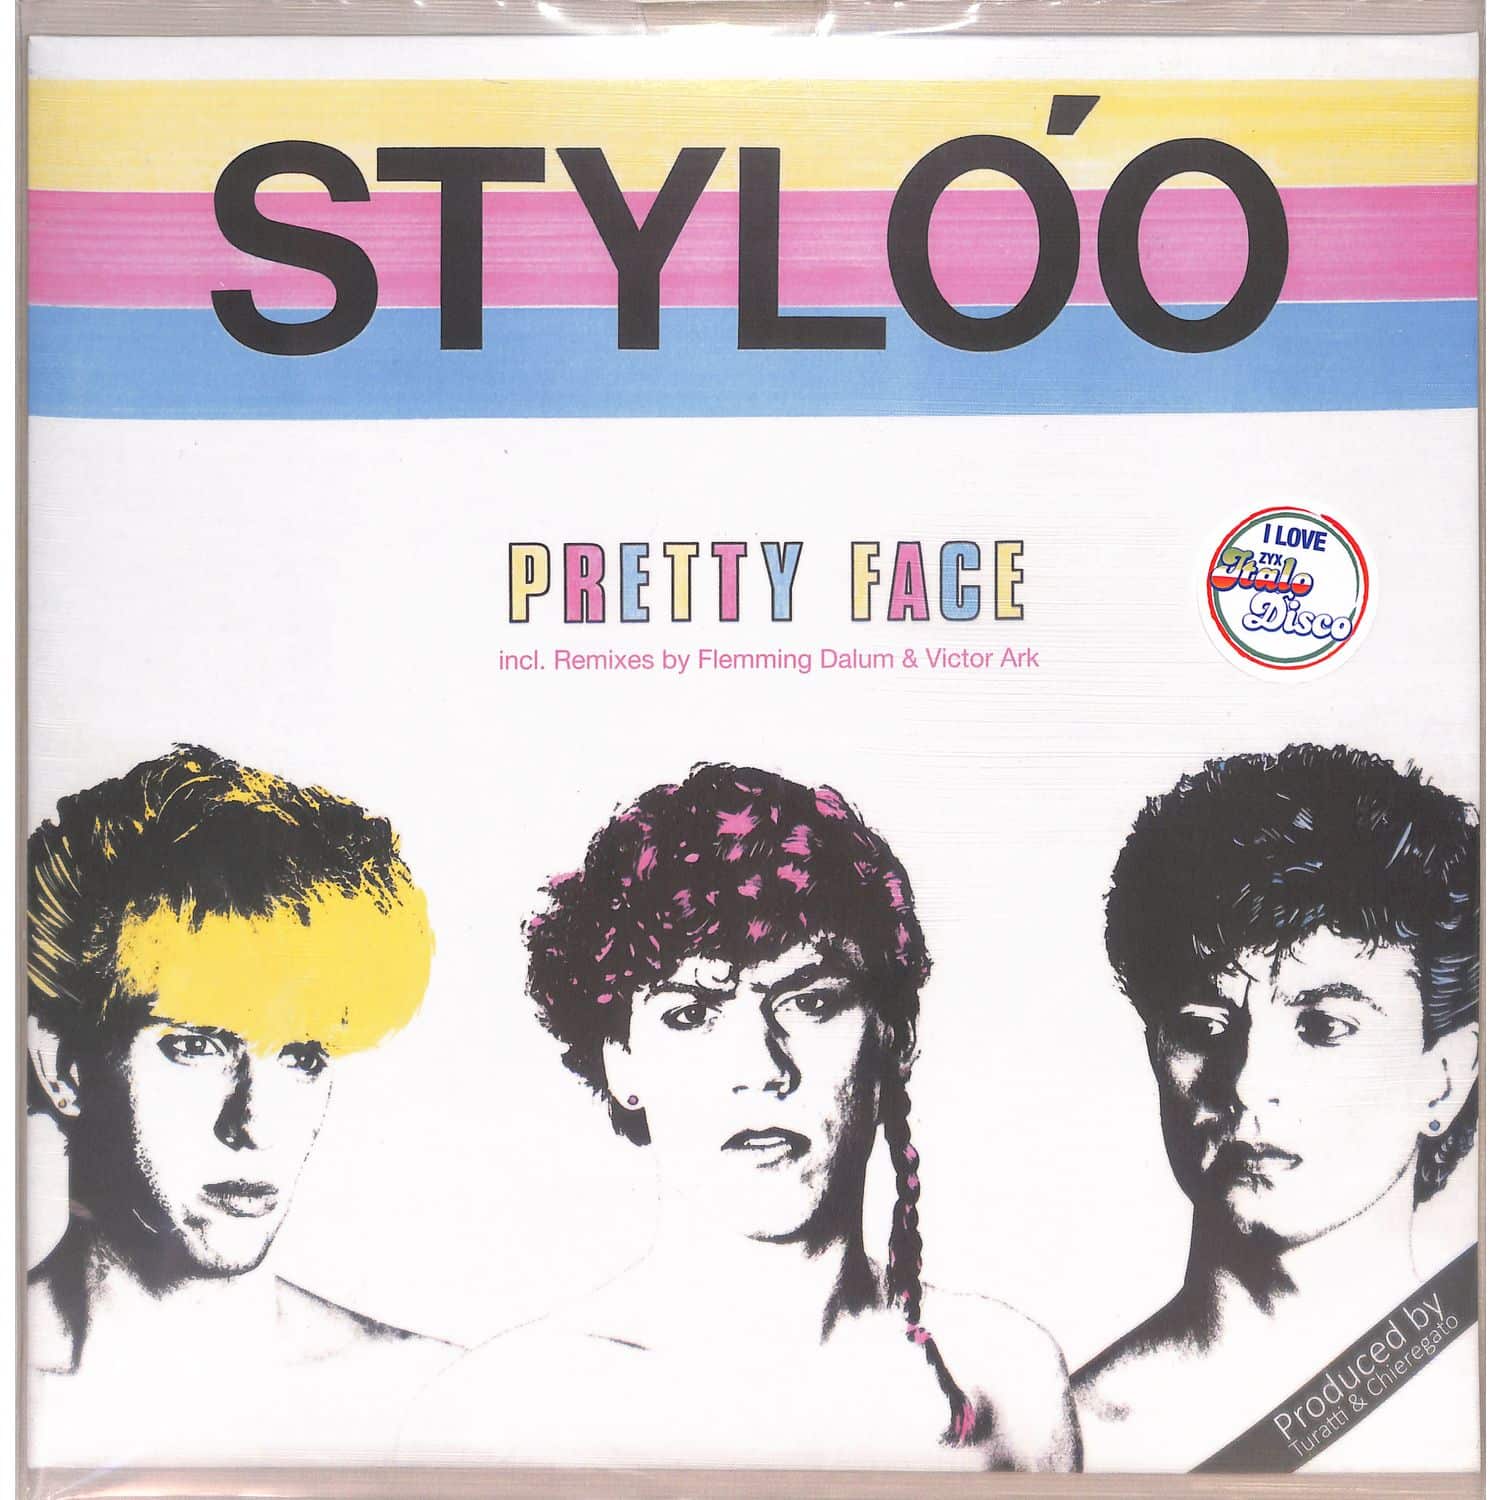 Styloo - PRETTY FACE